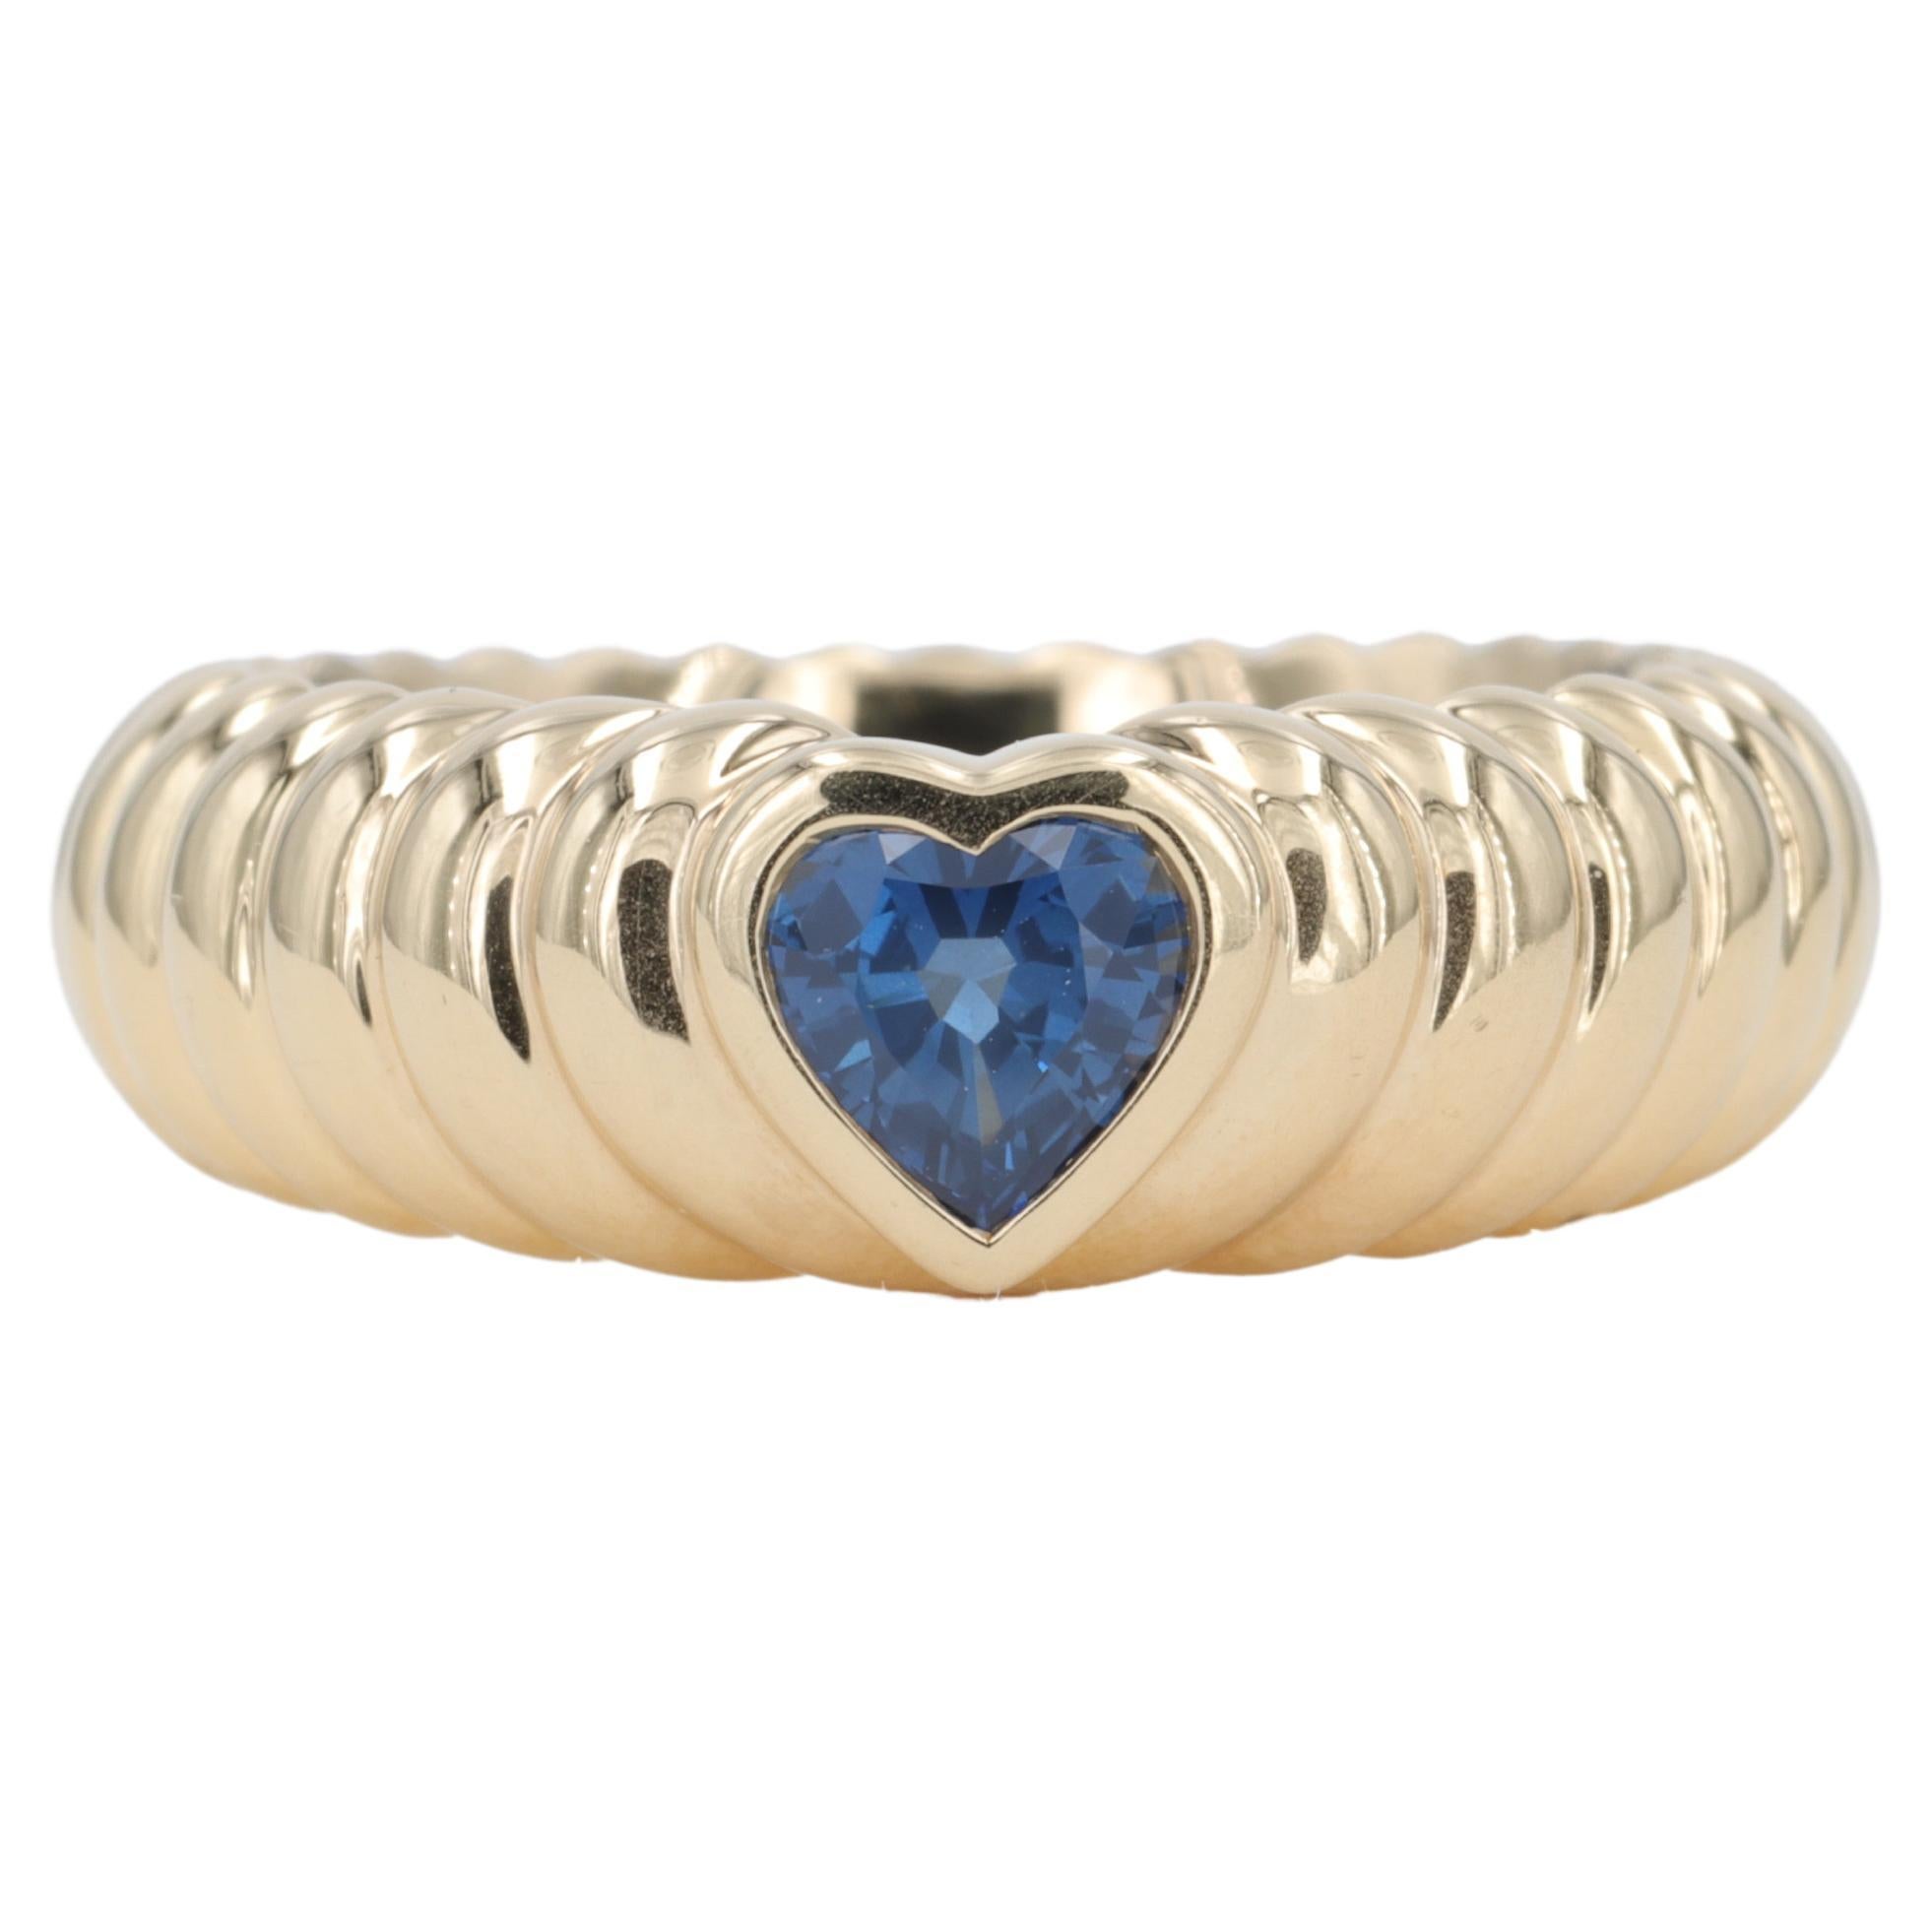 Tiffany & Co. Heart Shape Blue Sapphire and 18 Karat Yellow Gold Ring